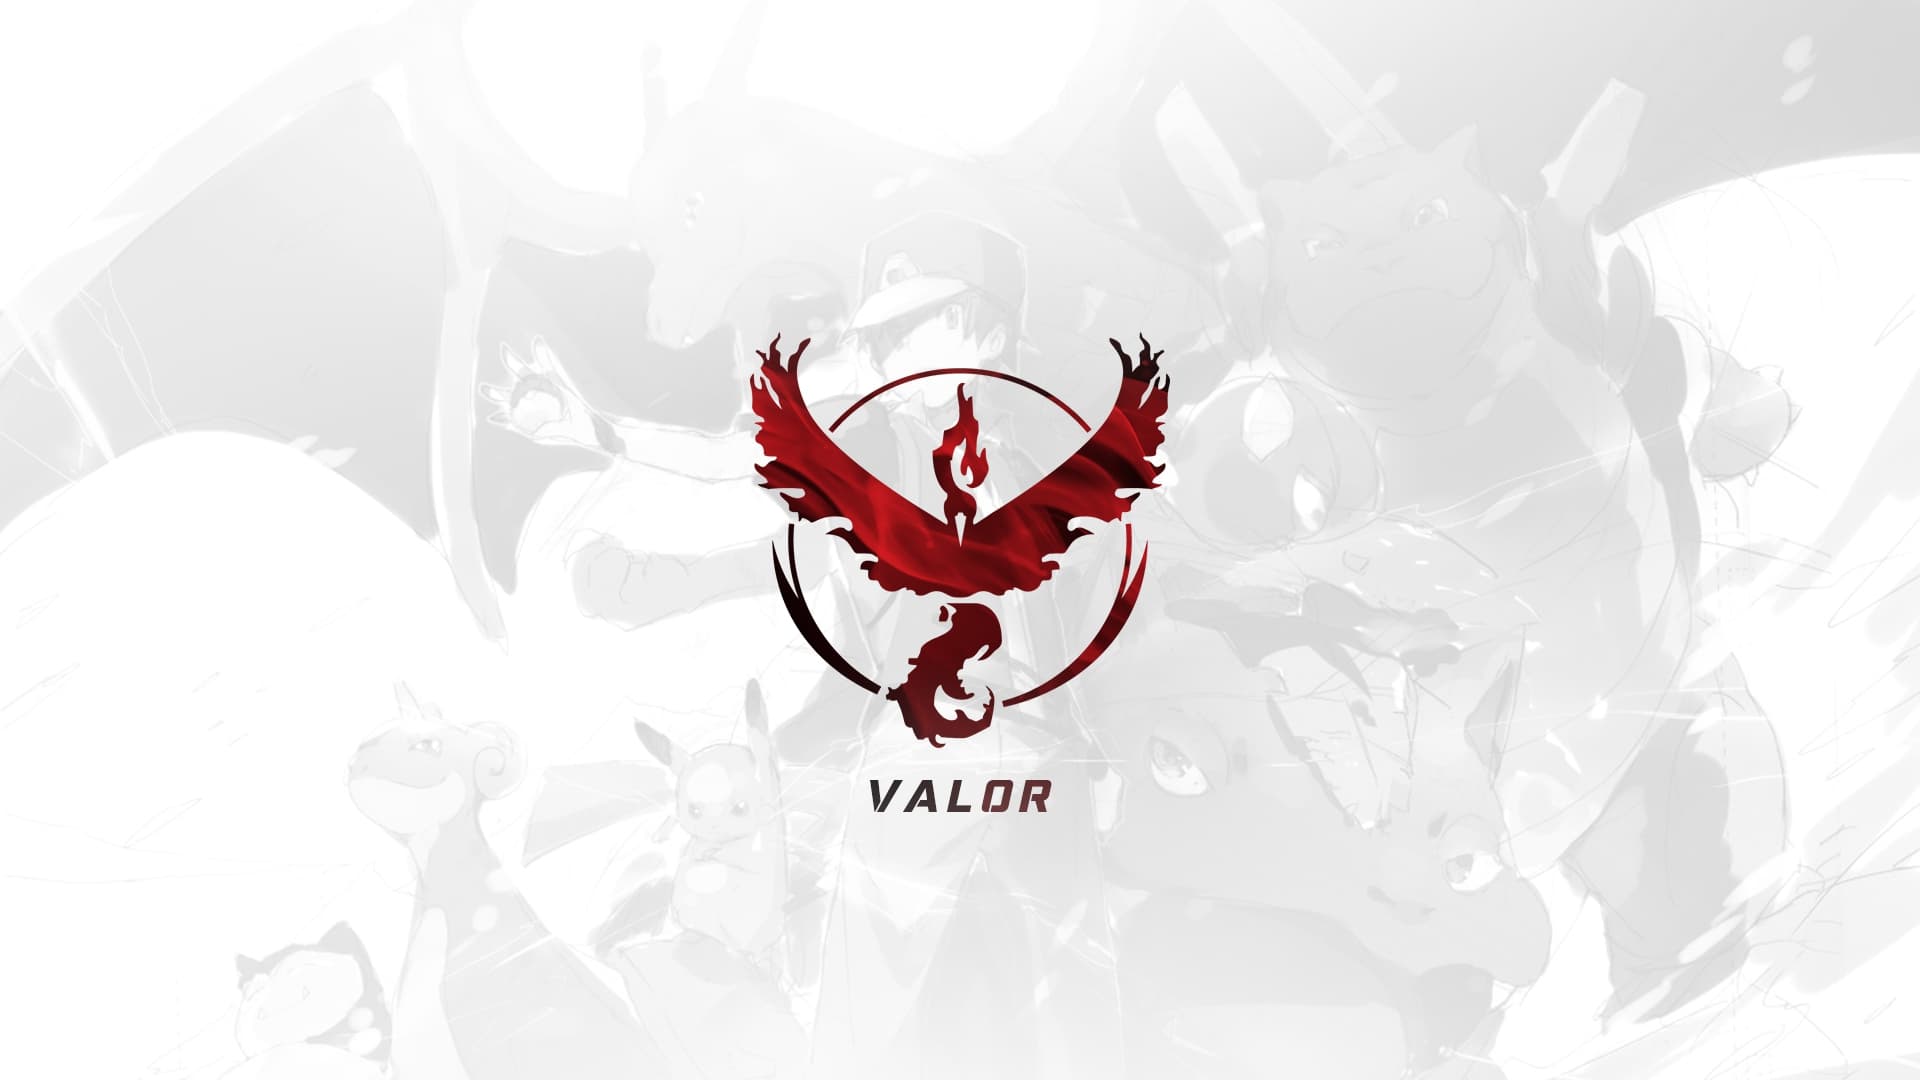 Red Team Valor Pokemon GO wallpaper HD 2016 High Resolution